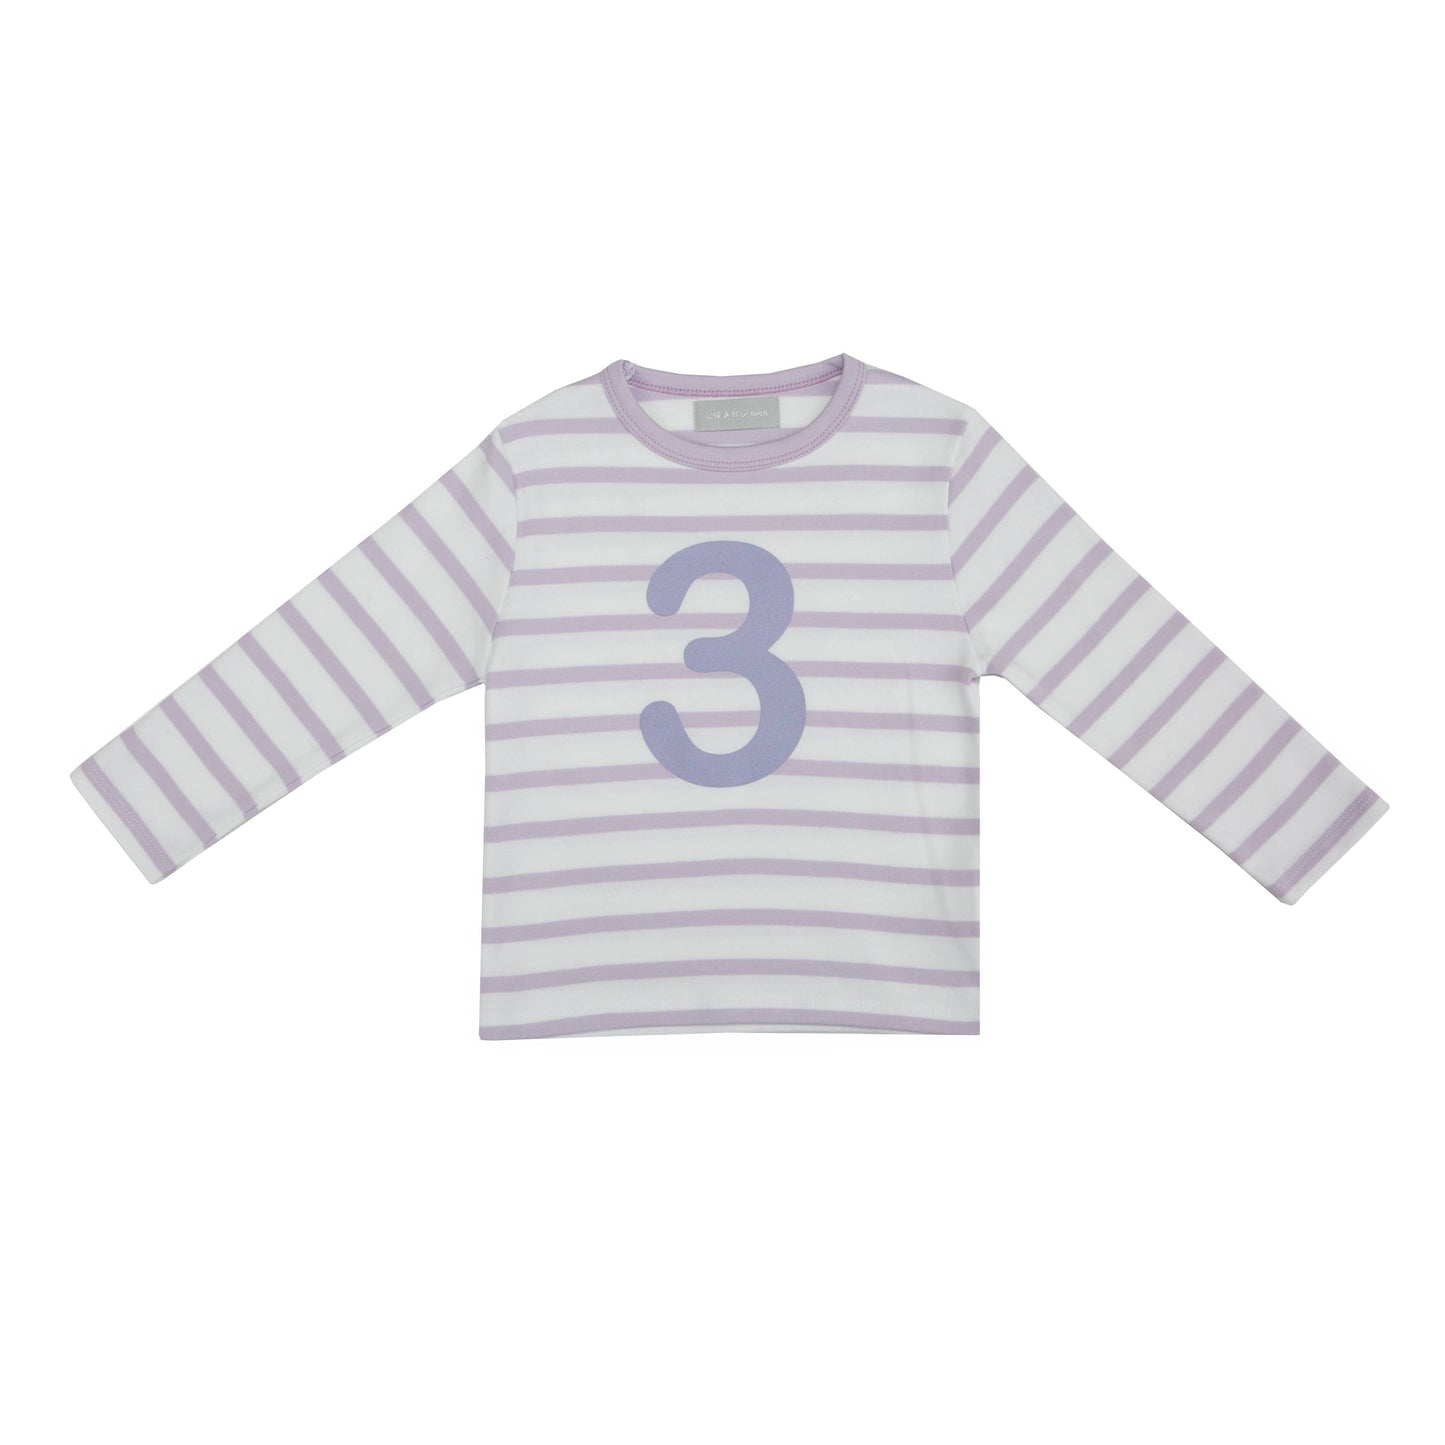 Violet & White Breton Striped Number 3 T Shirt